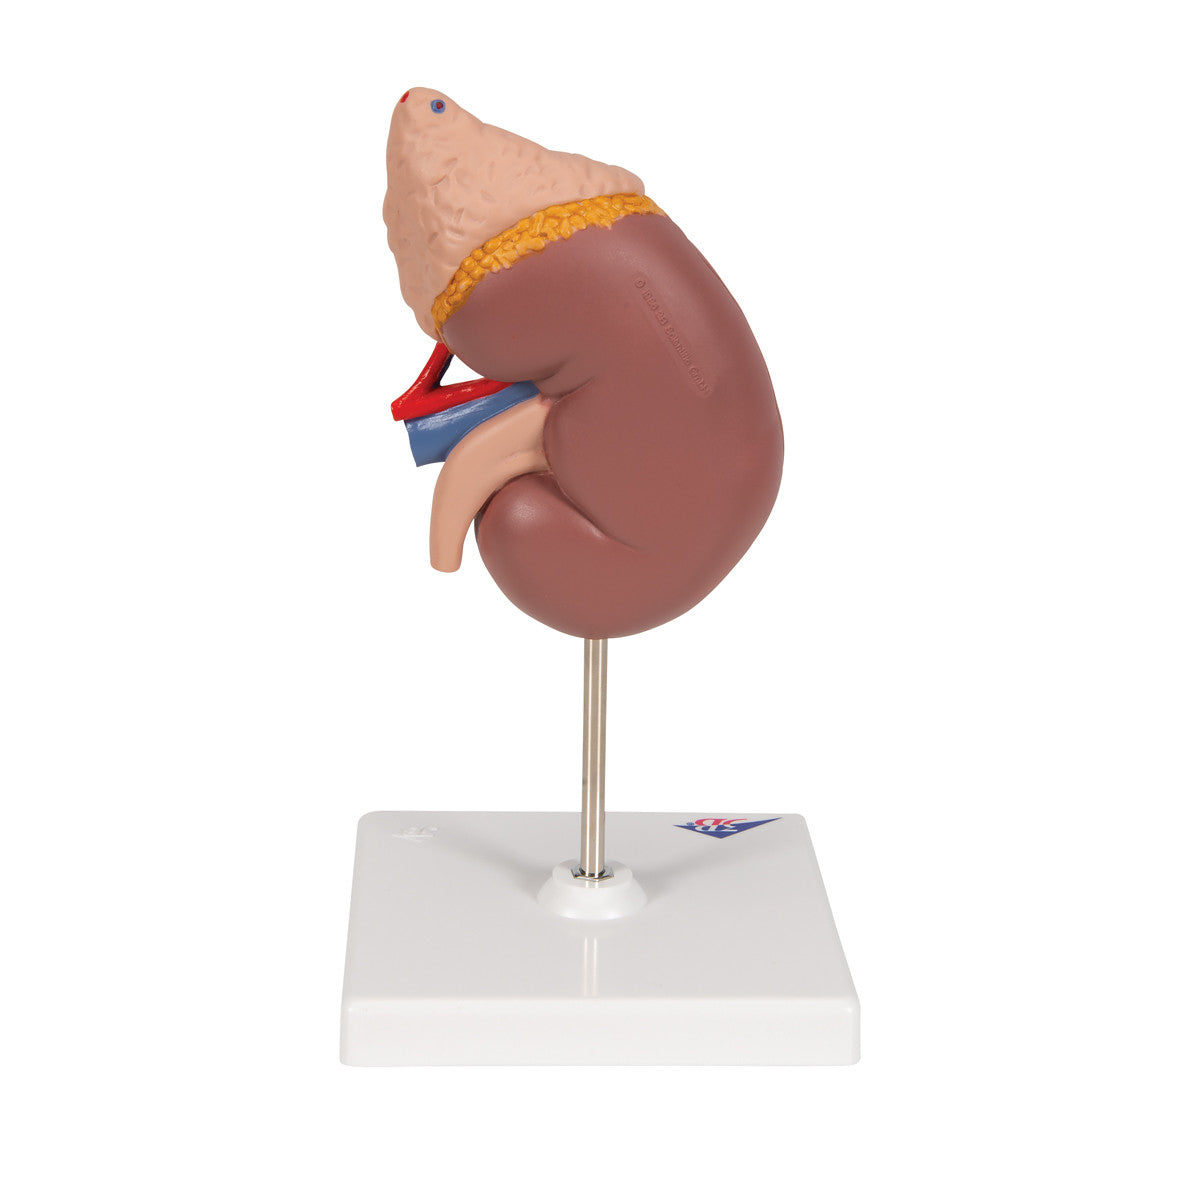 Kidney with Adrenal Gland | 3B Scientific K12